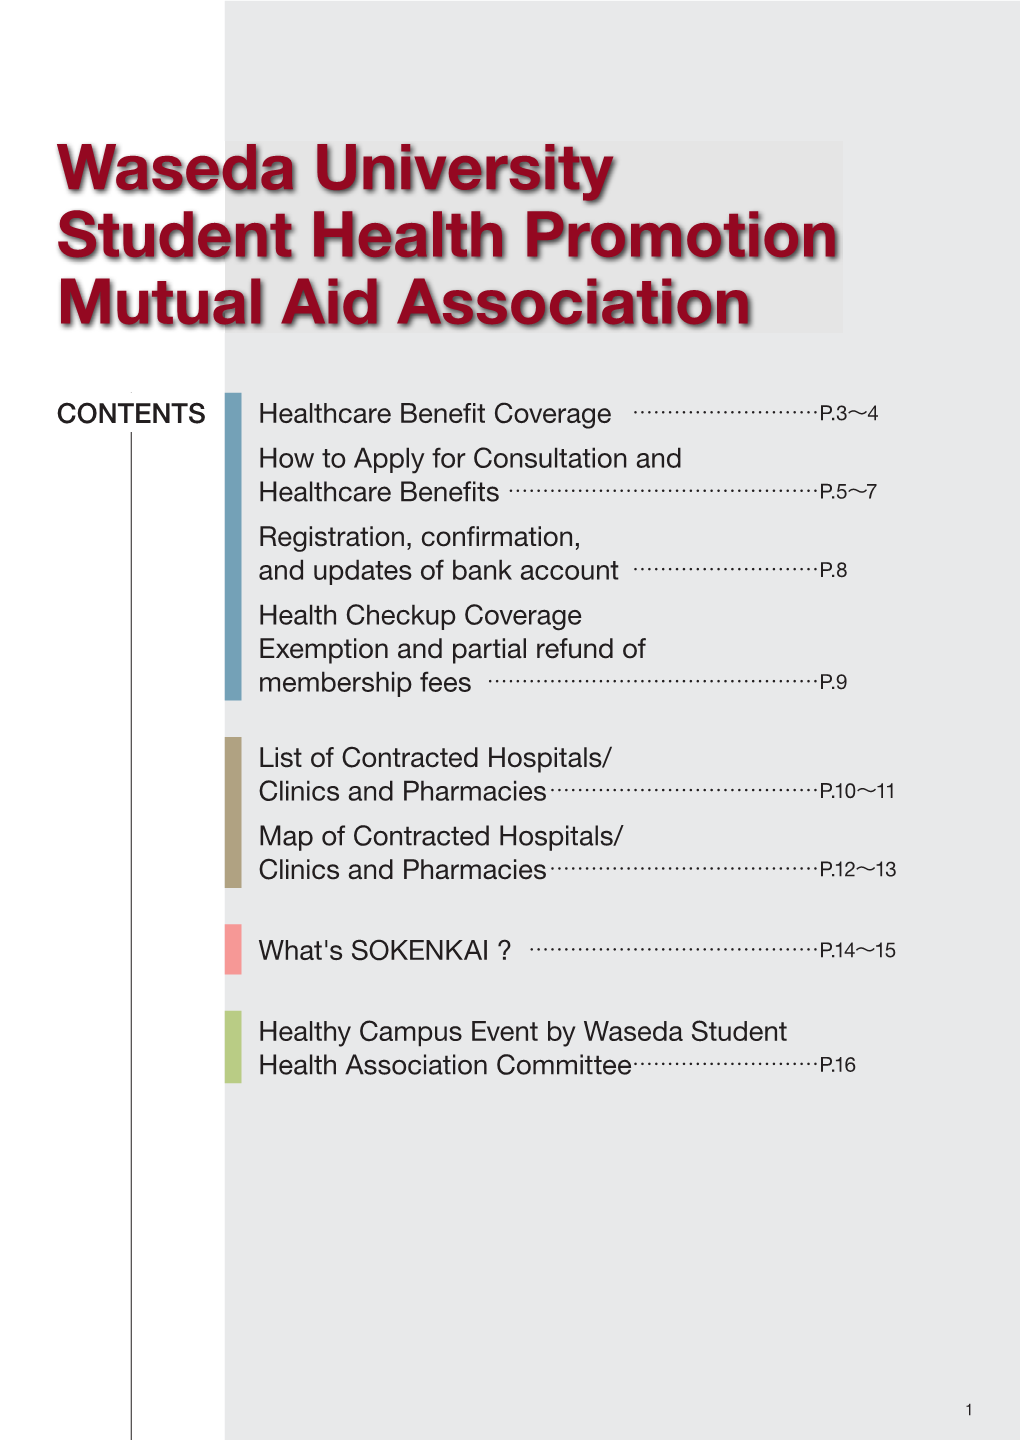 Waseda University Student Health Promotion Mutual Aid Association